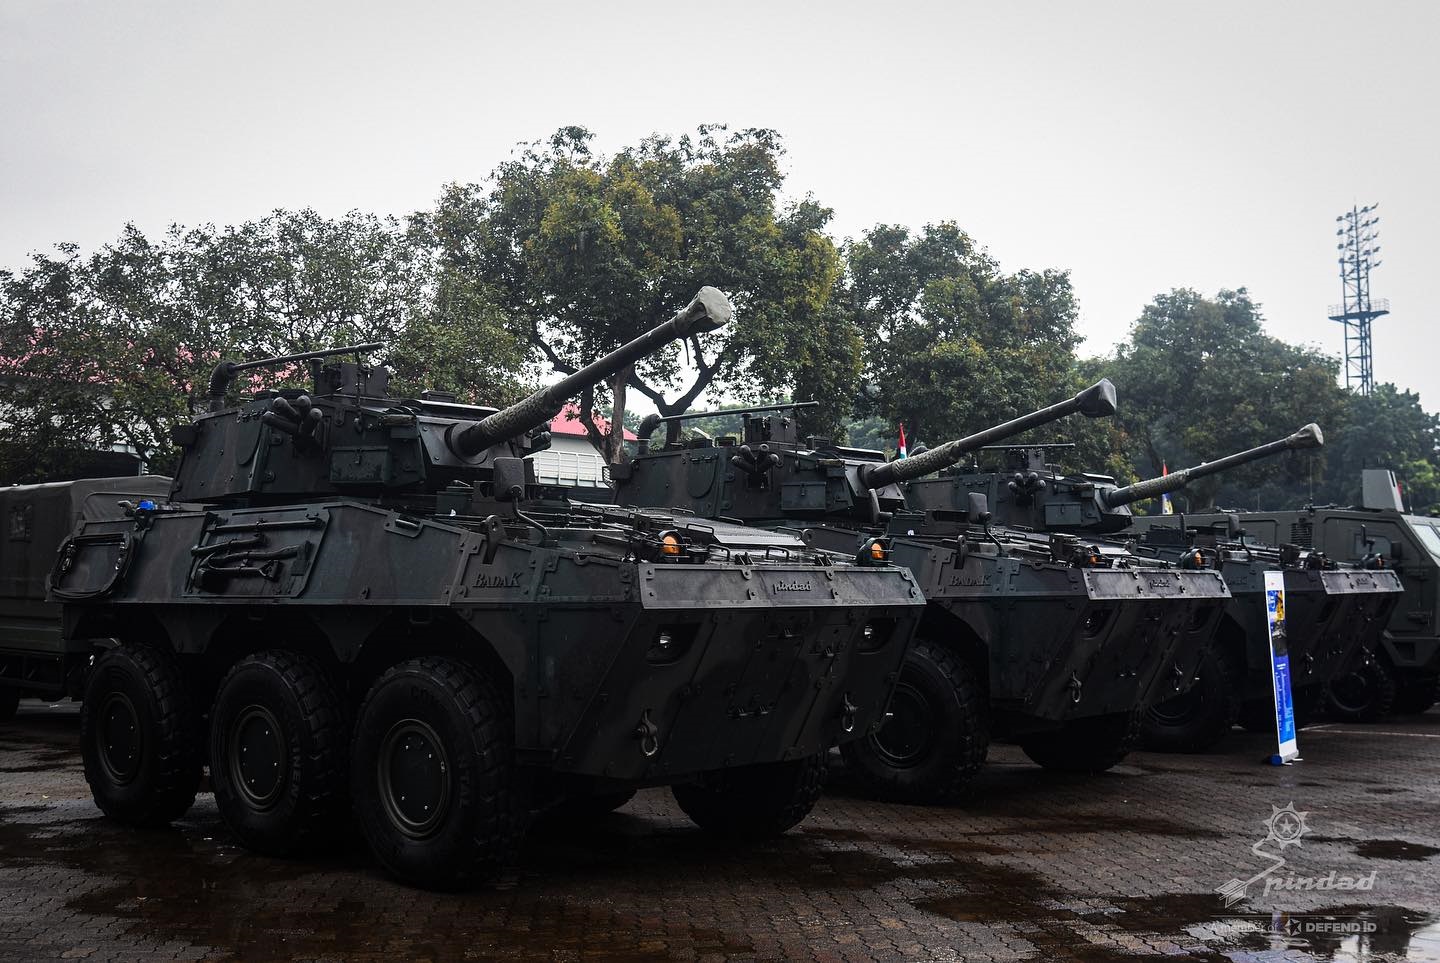 Indonesian Army Badak 6×6 fire support vehicles